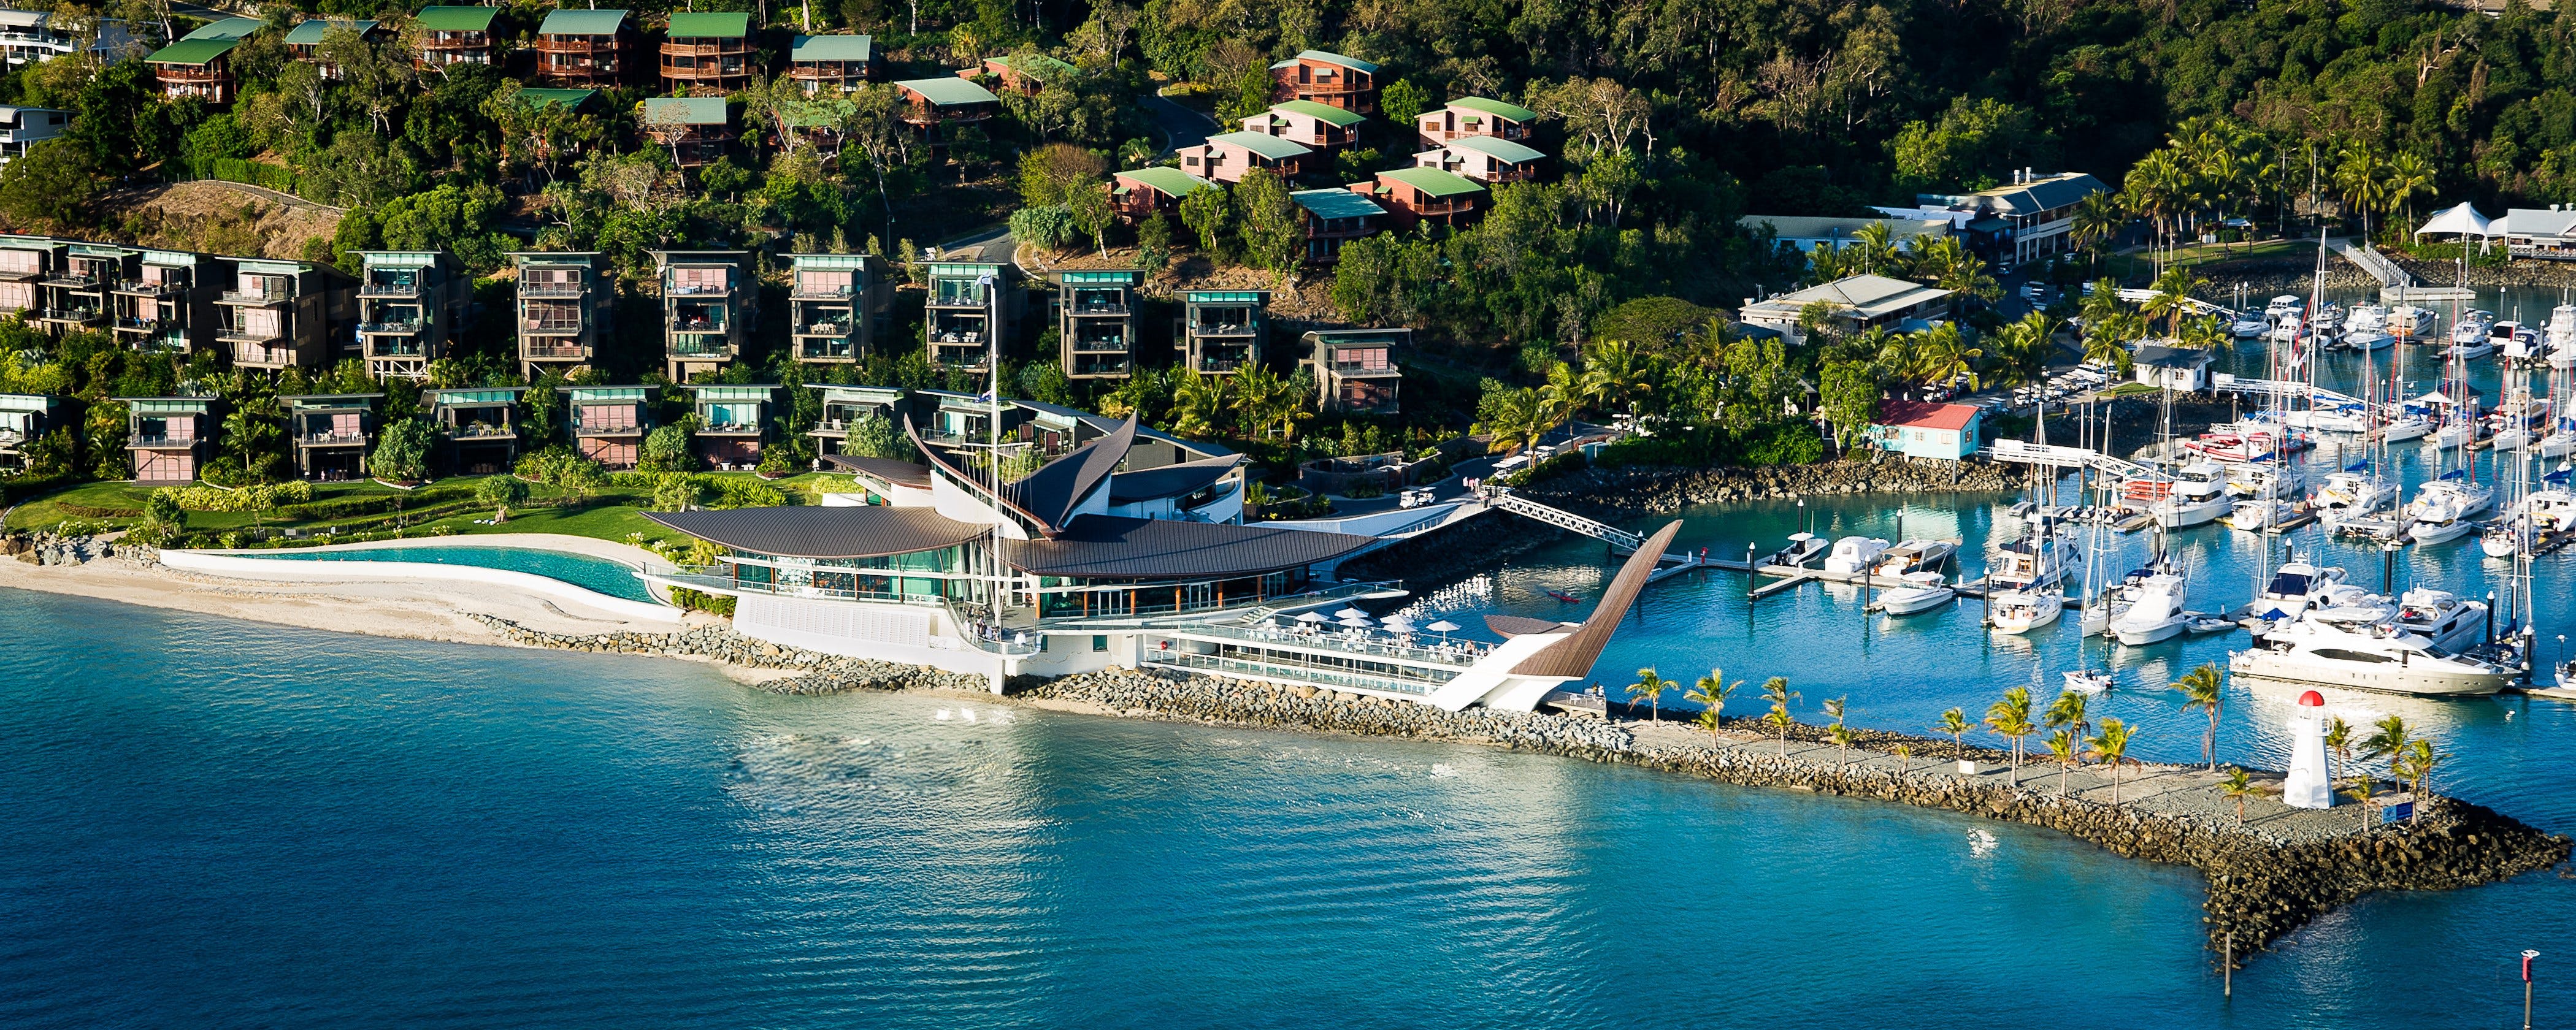 Hamilton Island Yacht Club - Attractions Melbourne